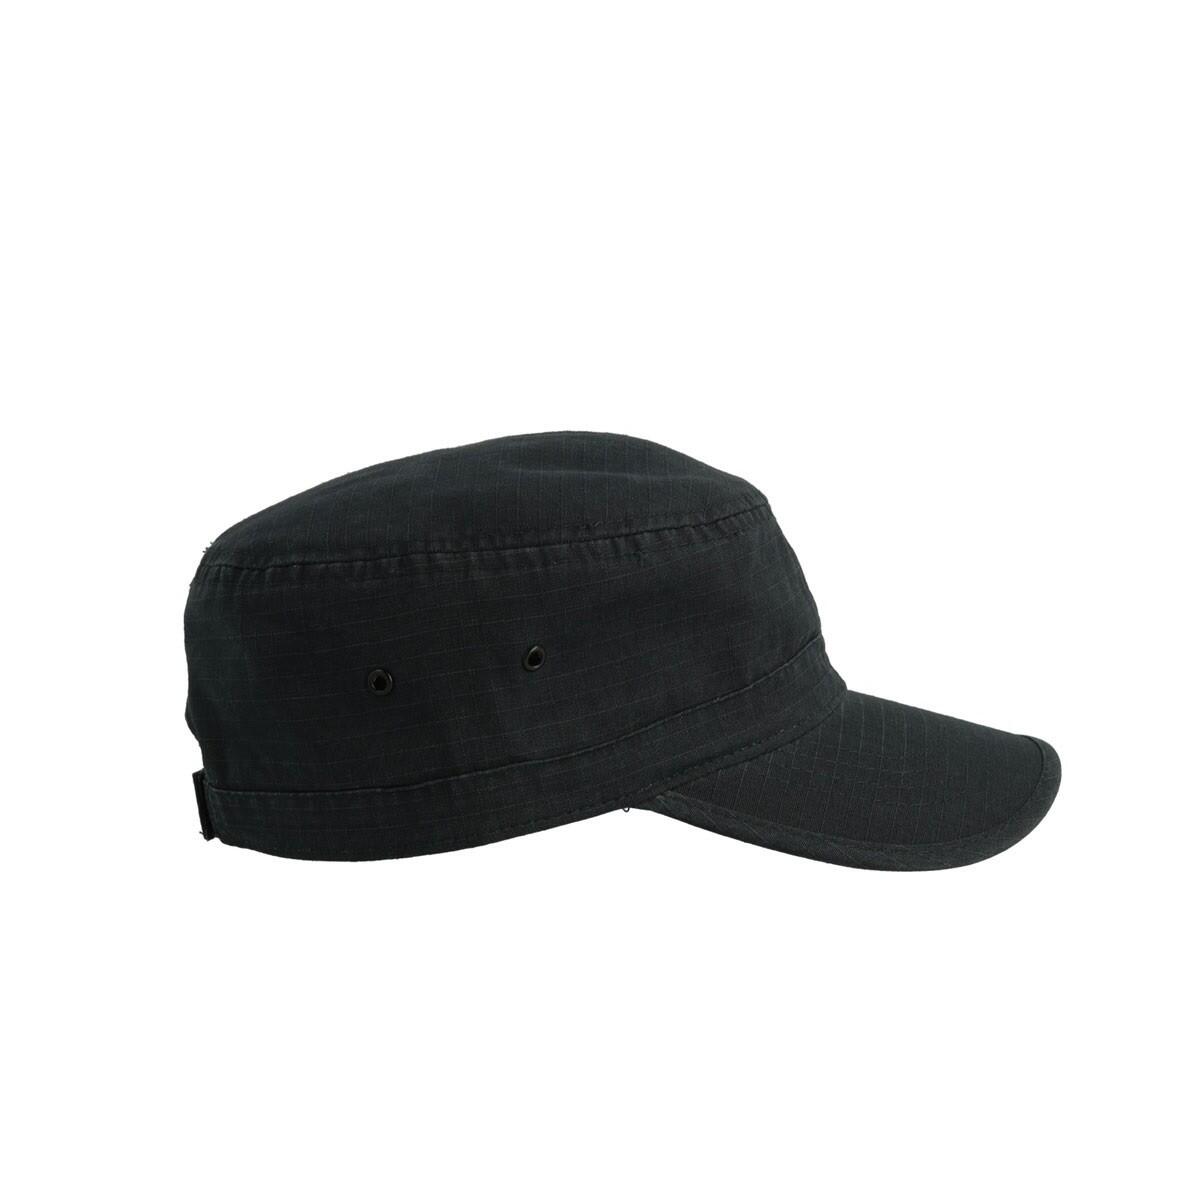 Army Military Cap (Black) 4/4